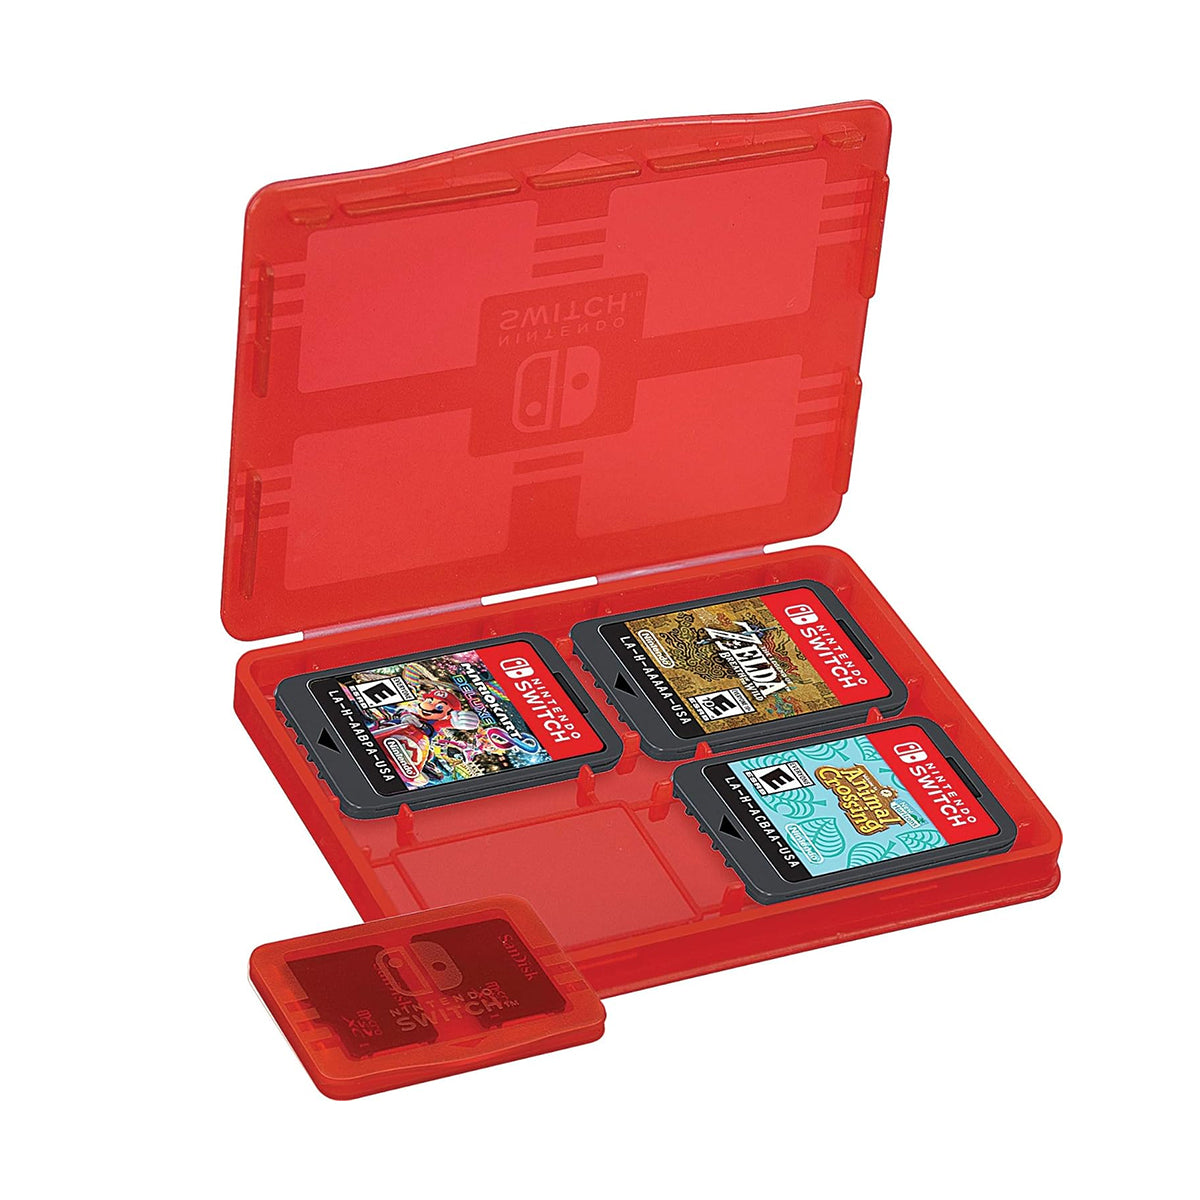 Bolso Nintendo Switch Lite Luigis Mansion 3 (Game Traveler Case)